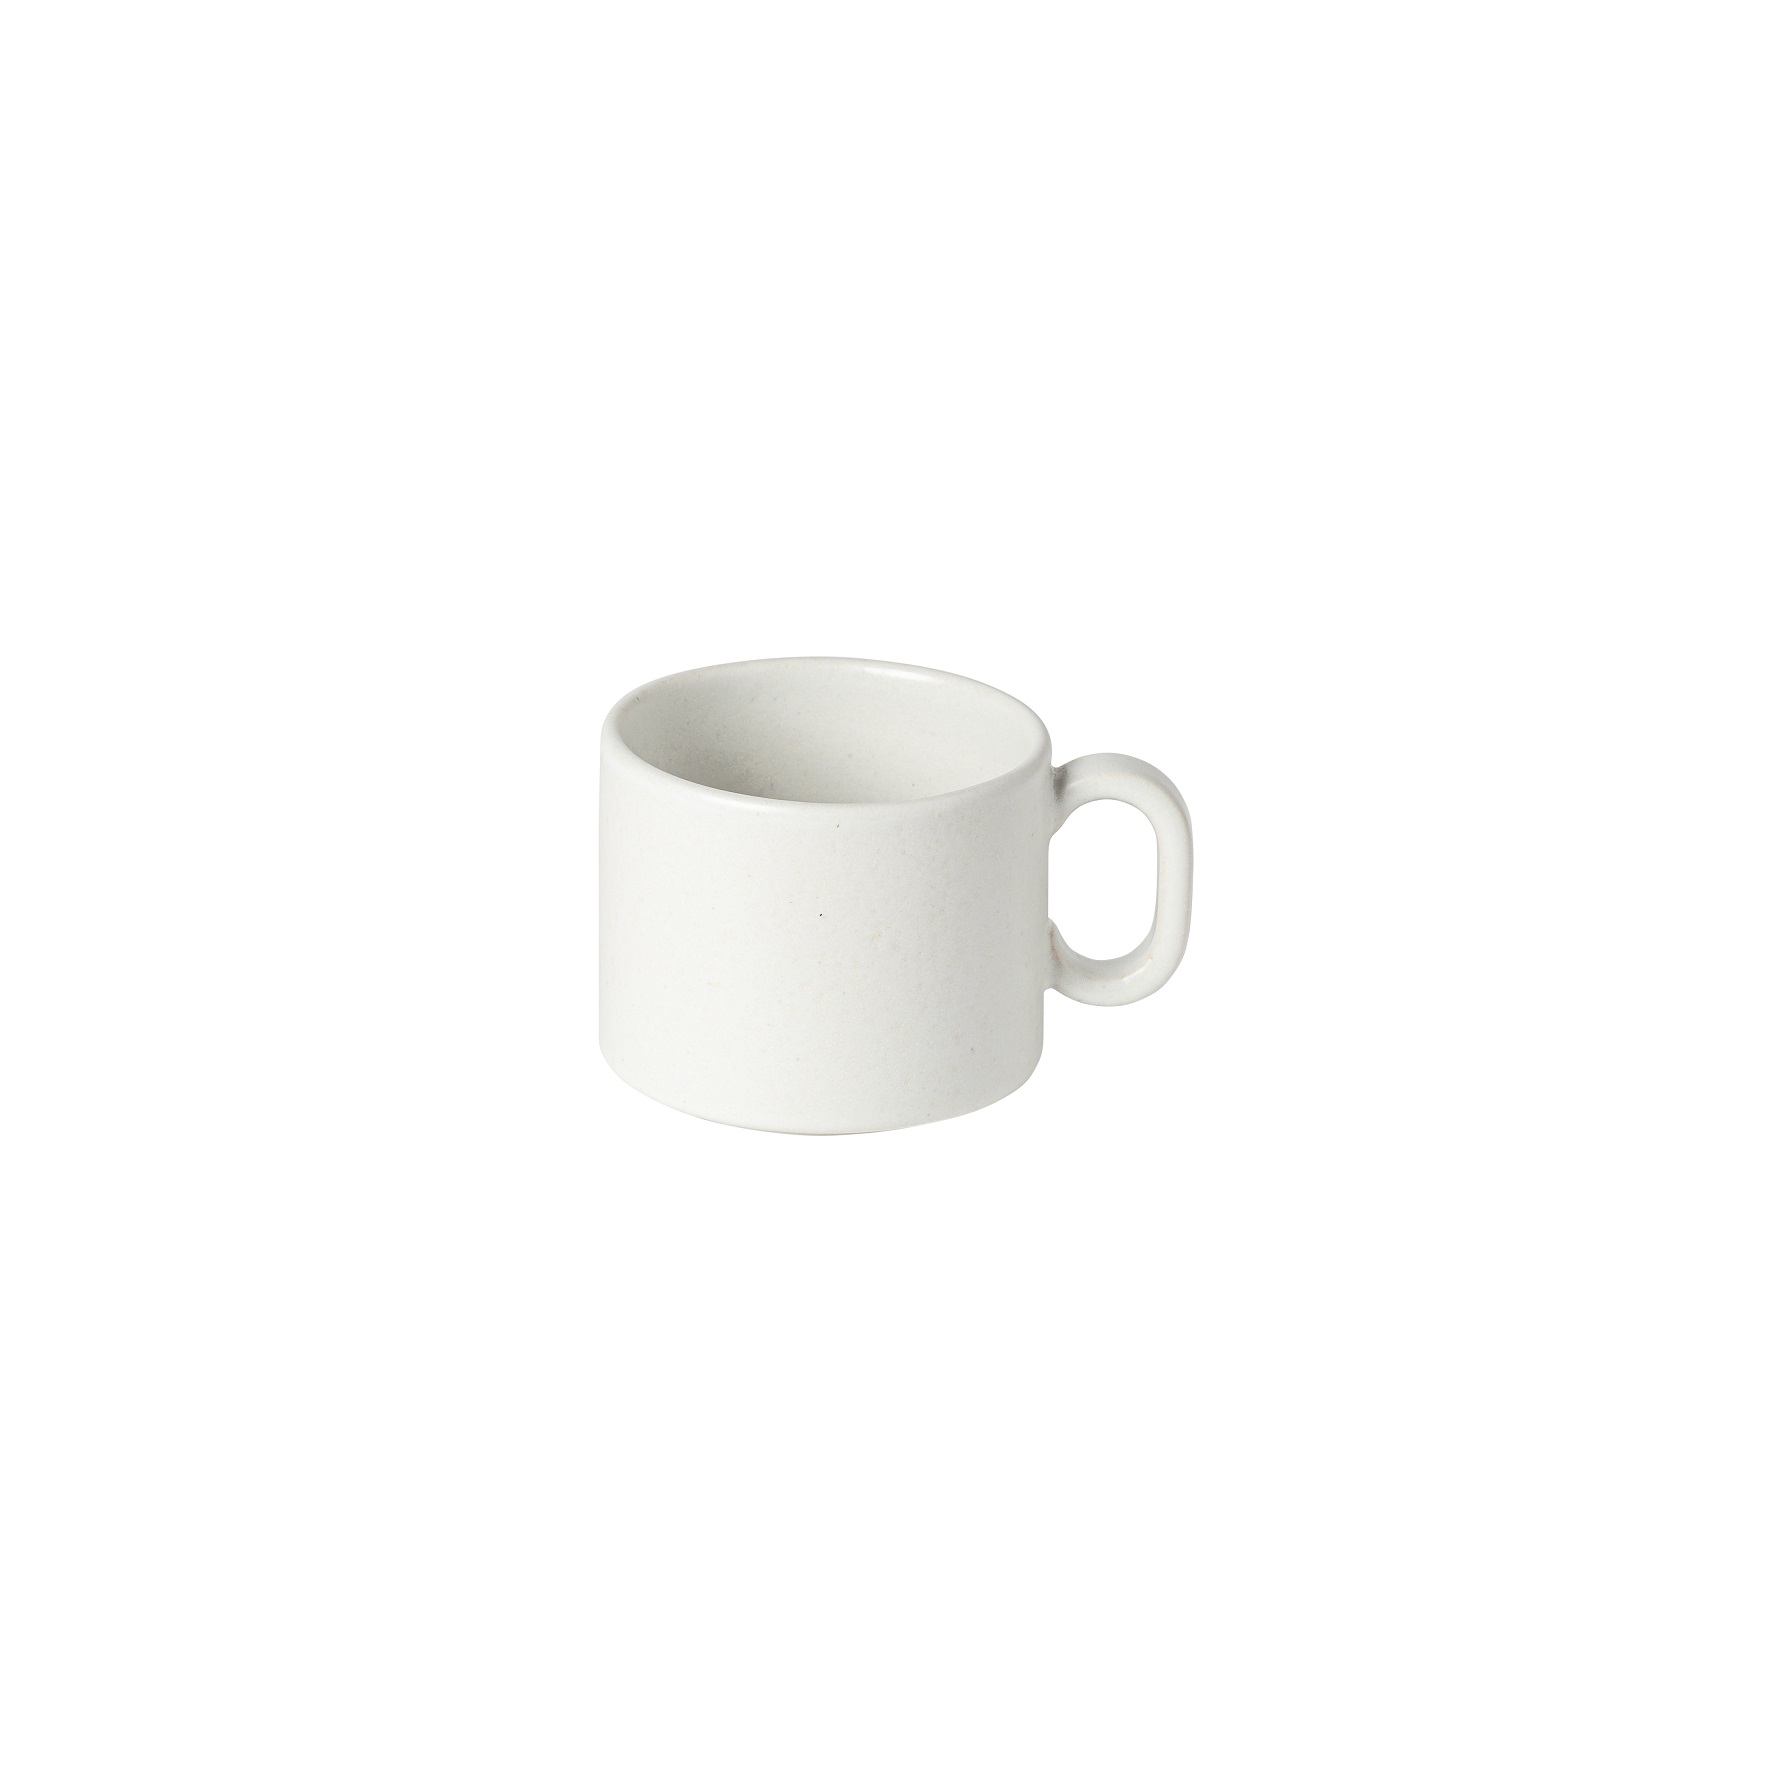 Redonda White Tea Cup 25cl Gift